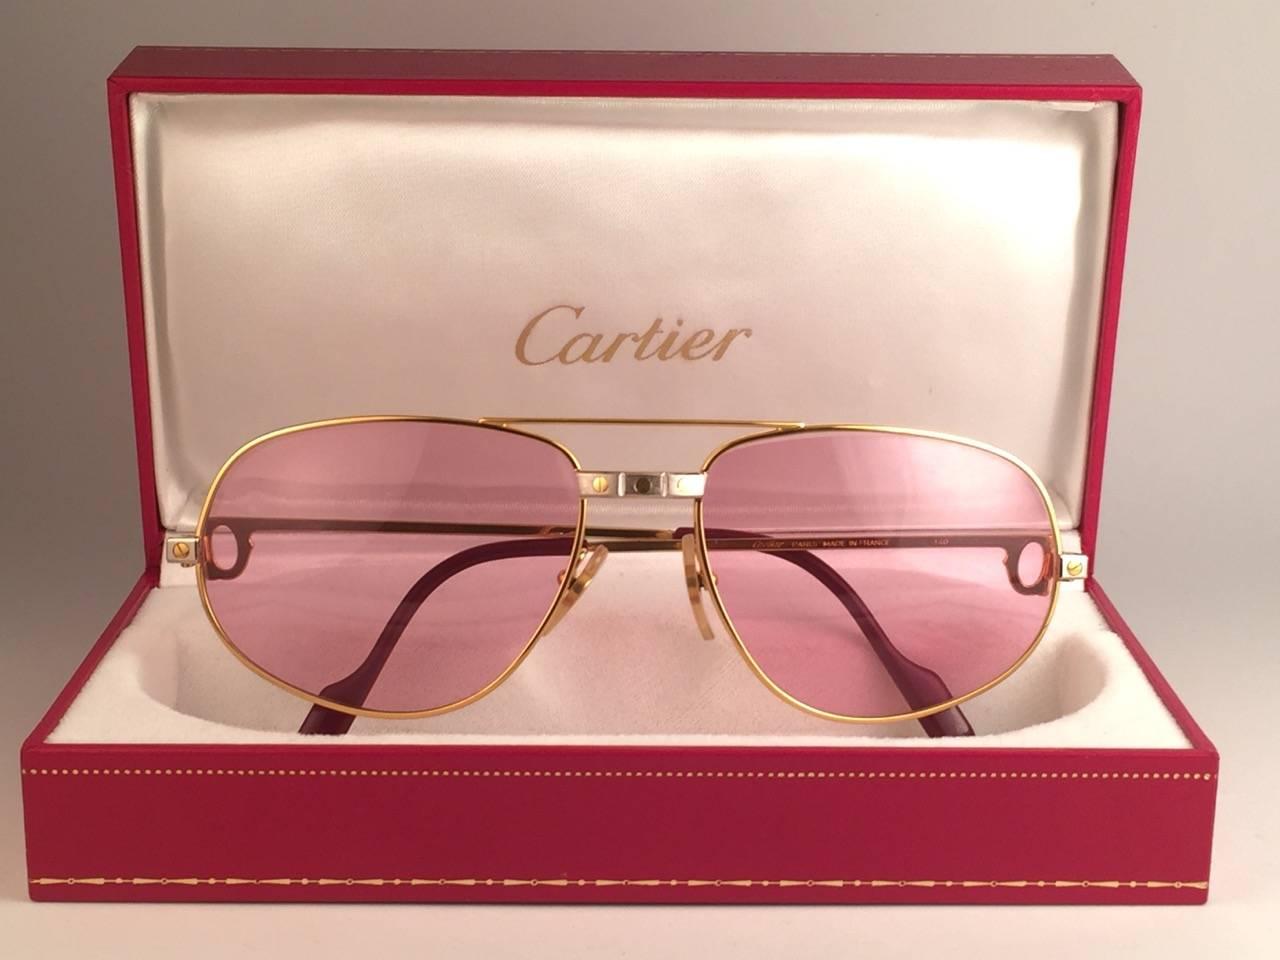 cartier rose gold glasses